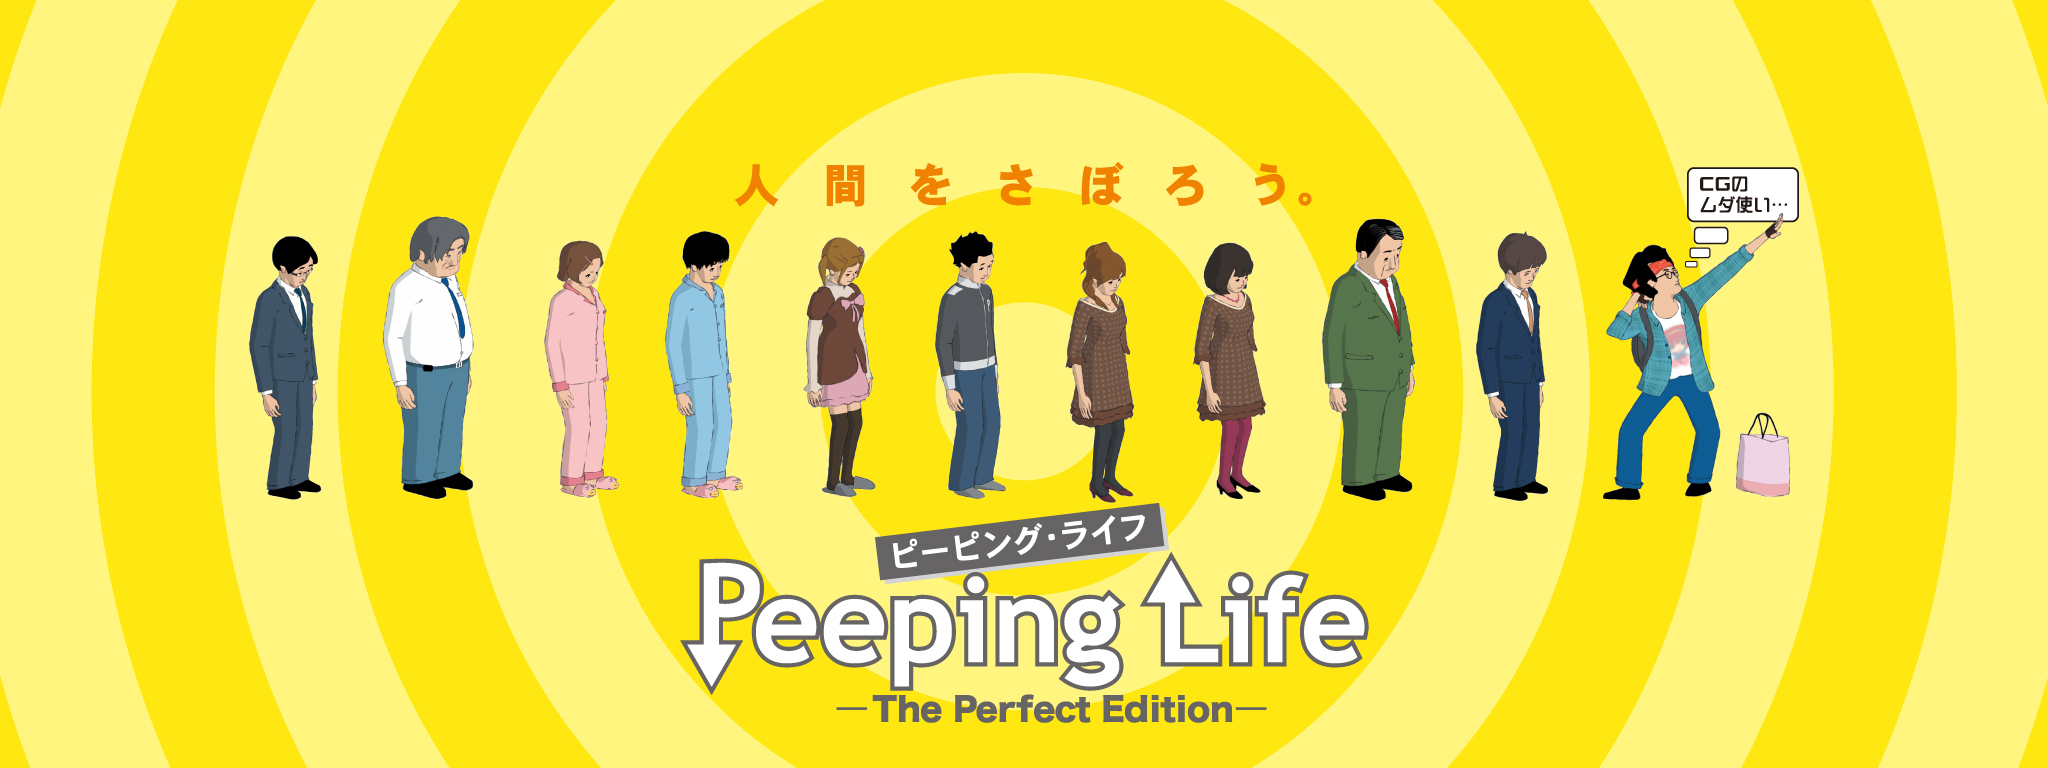 Peeping Life (ピーピング・ライフ) －The Perfect Edition－ | Hulu